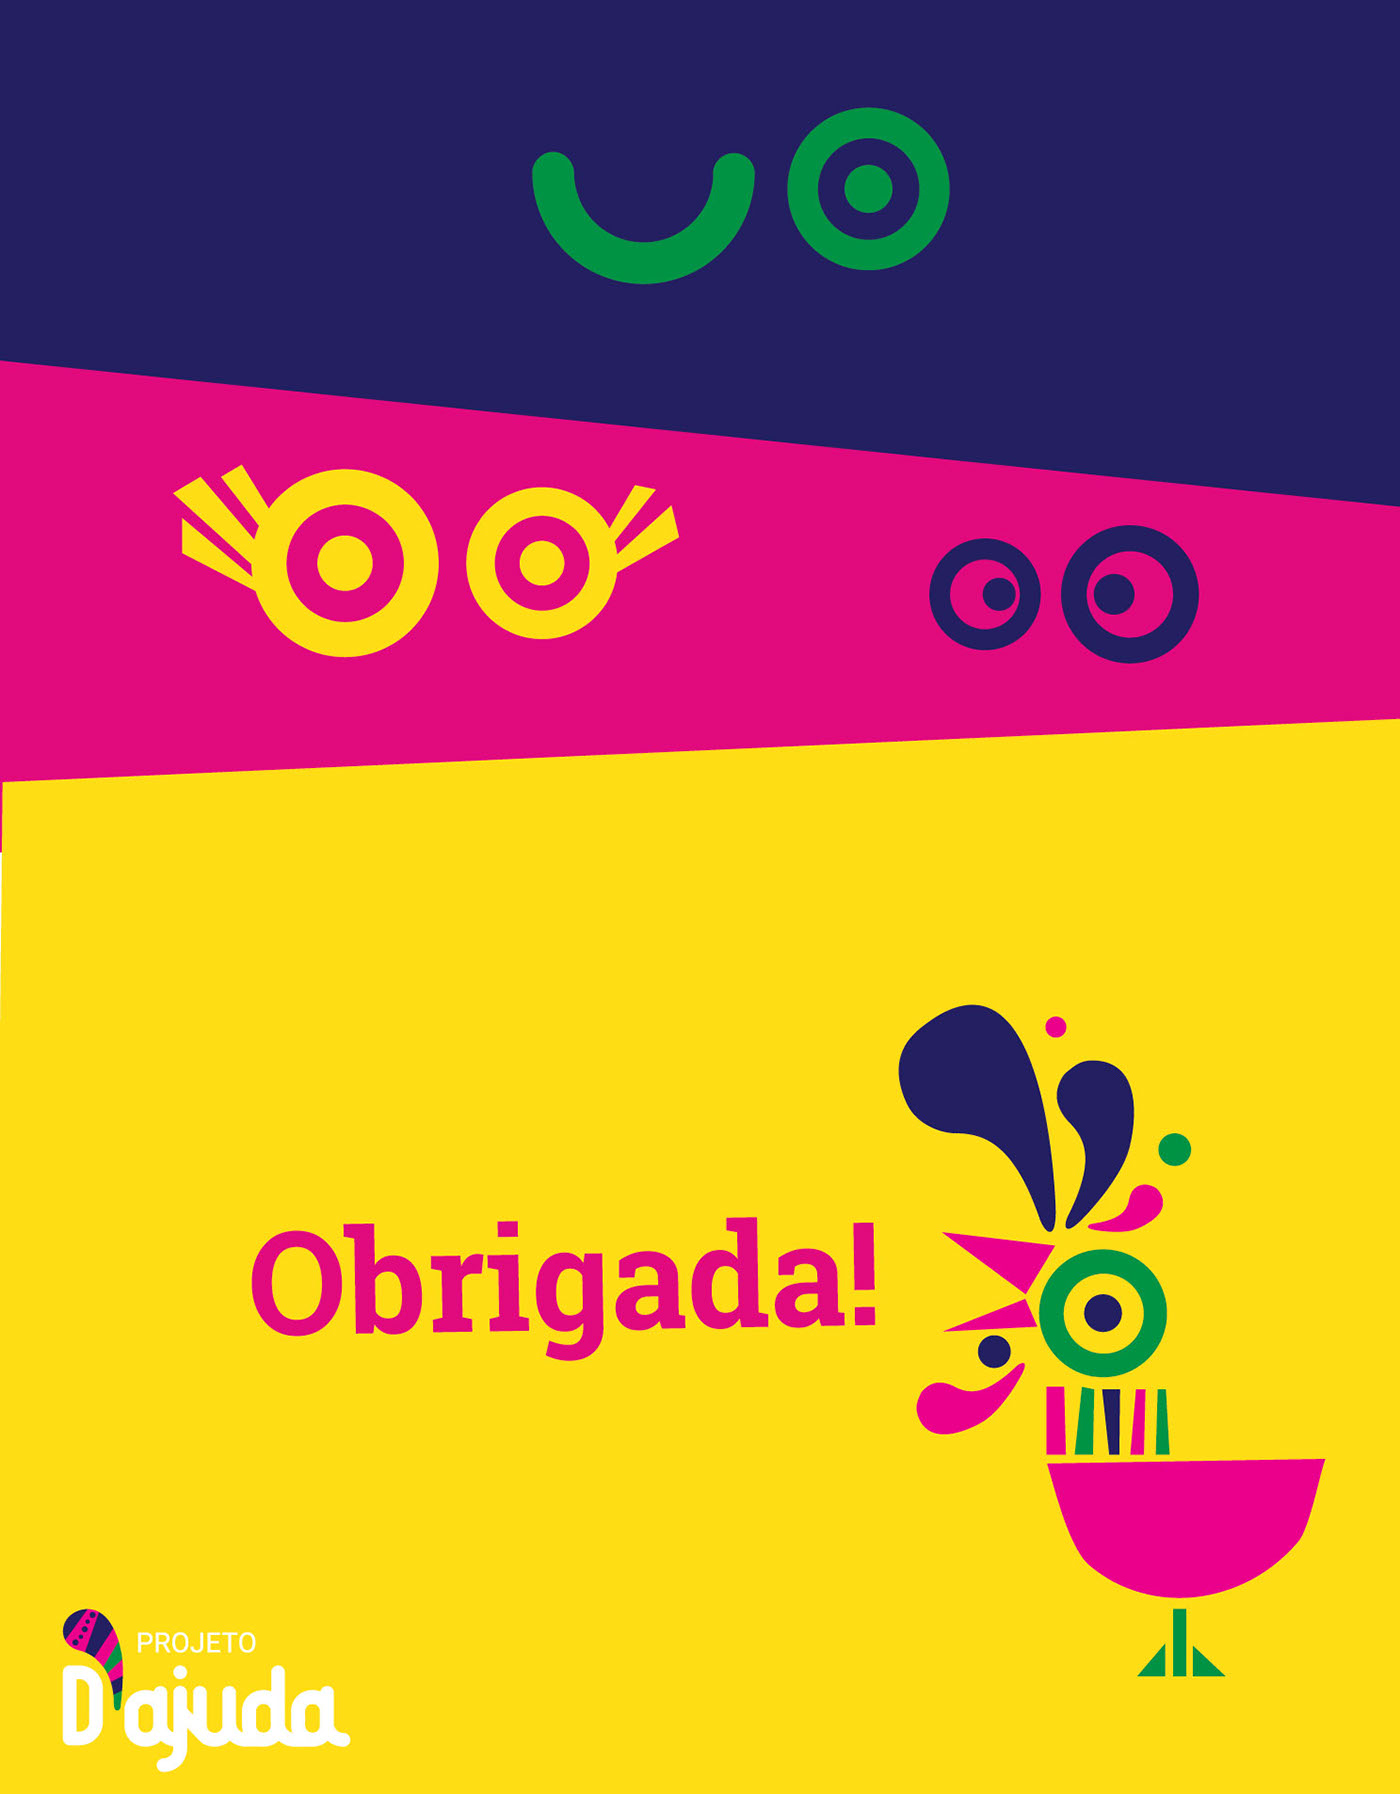 feira Galo design identidade logo festa festival grafico Rooster torre ajuda lisboa party social design colors